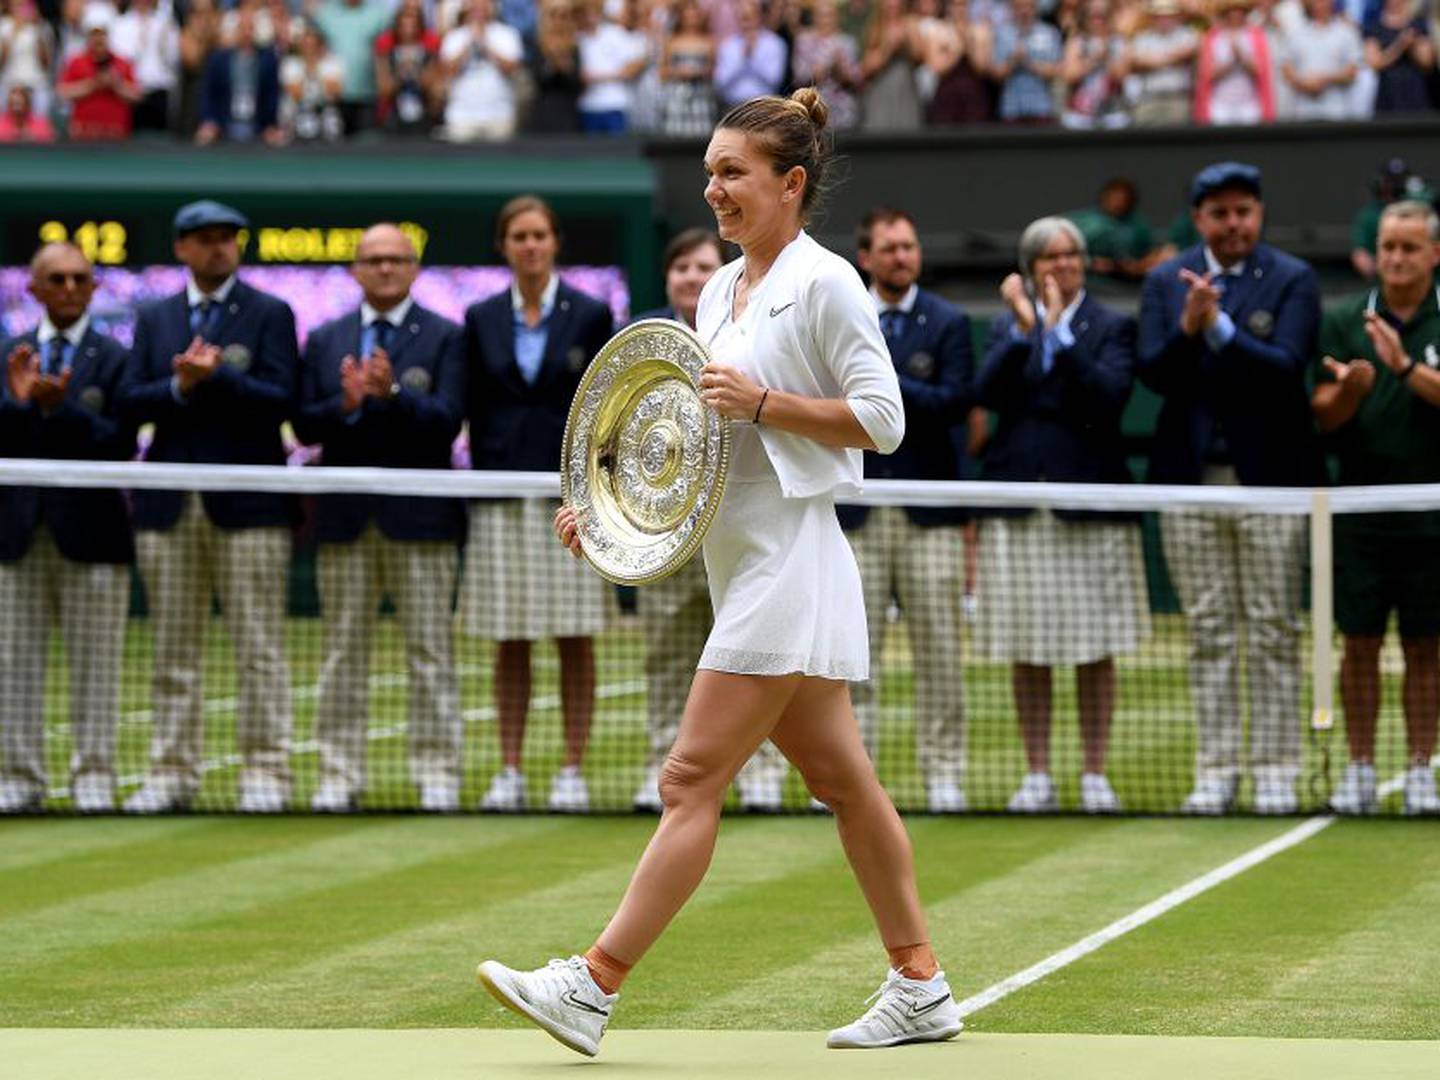 Ahorro compromiso pista wimbledon tenis femenino Simona Halep campeona de Wimbledon 2019 : Simona  Halep campeona de Wimbledon 2019